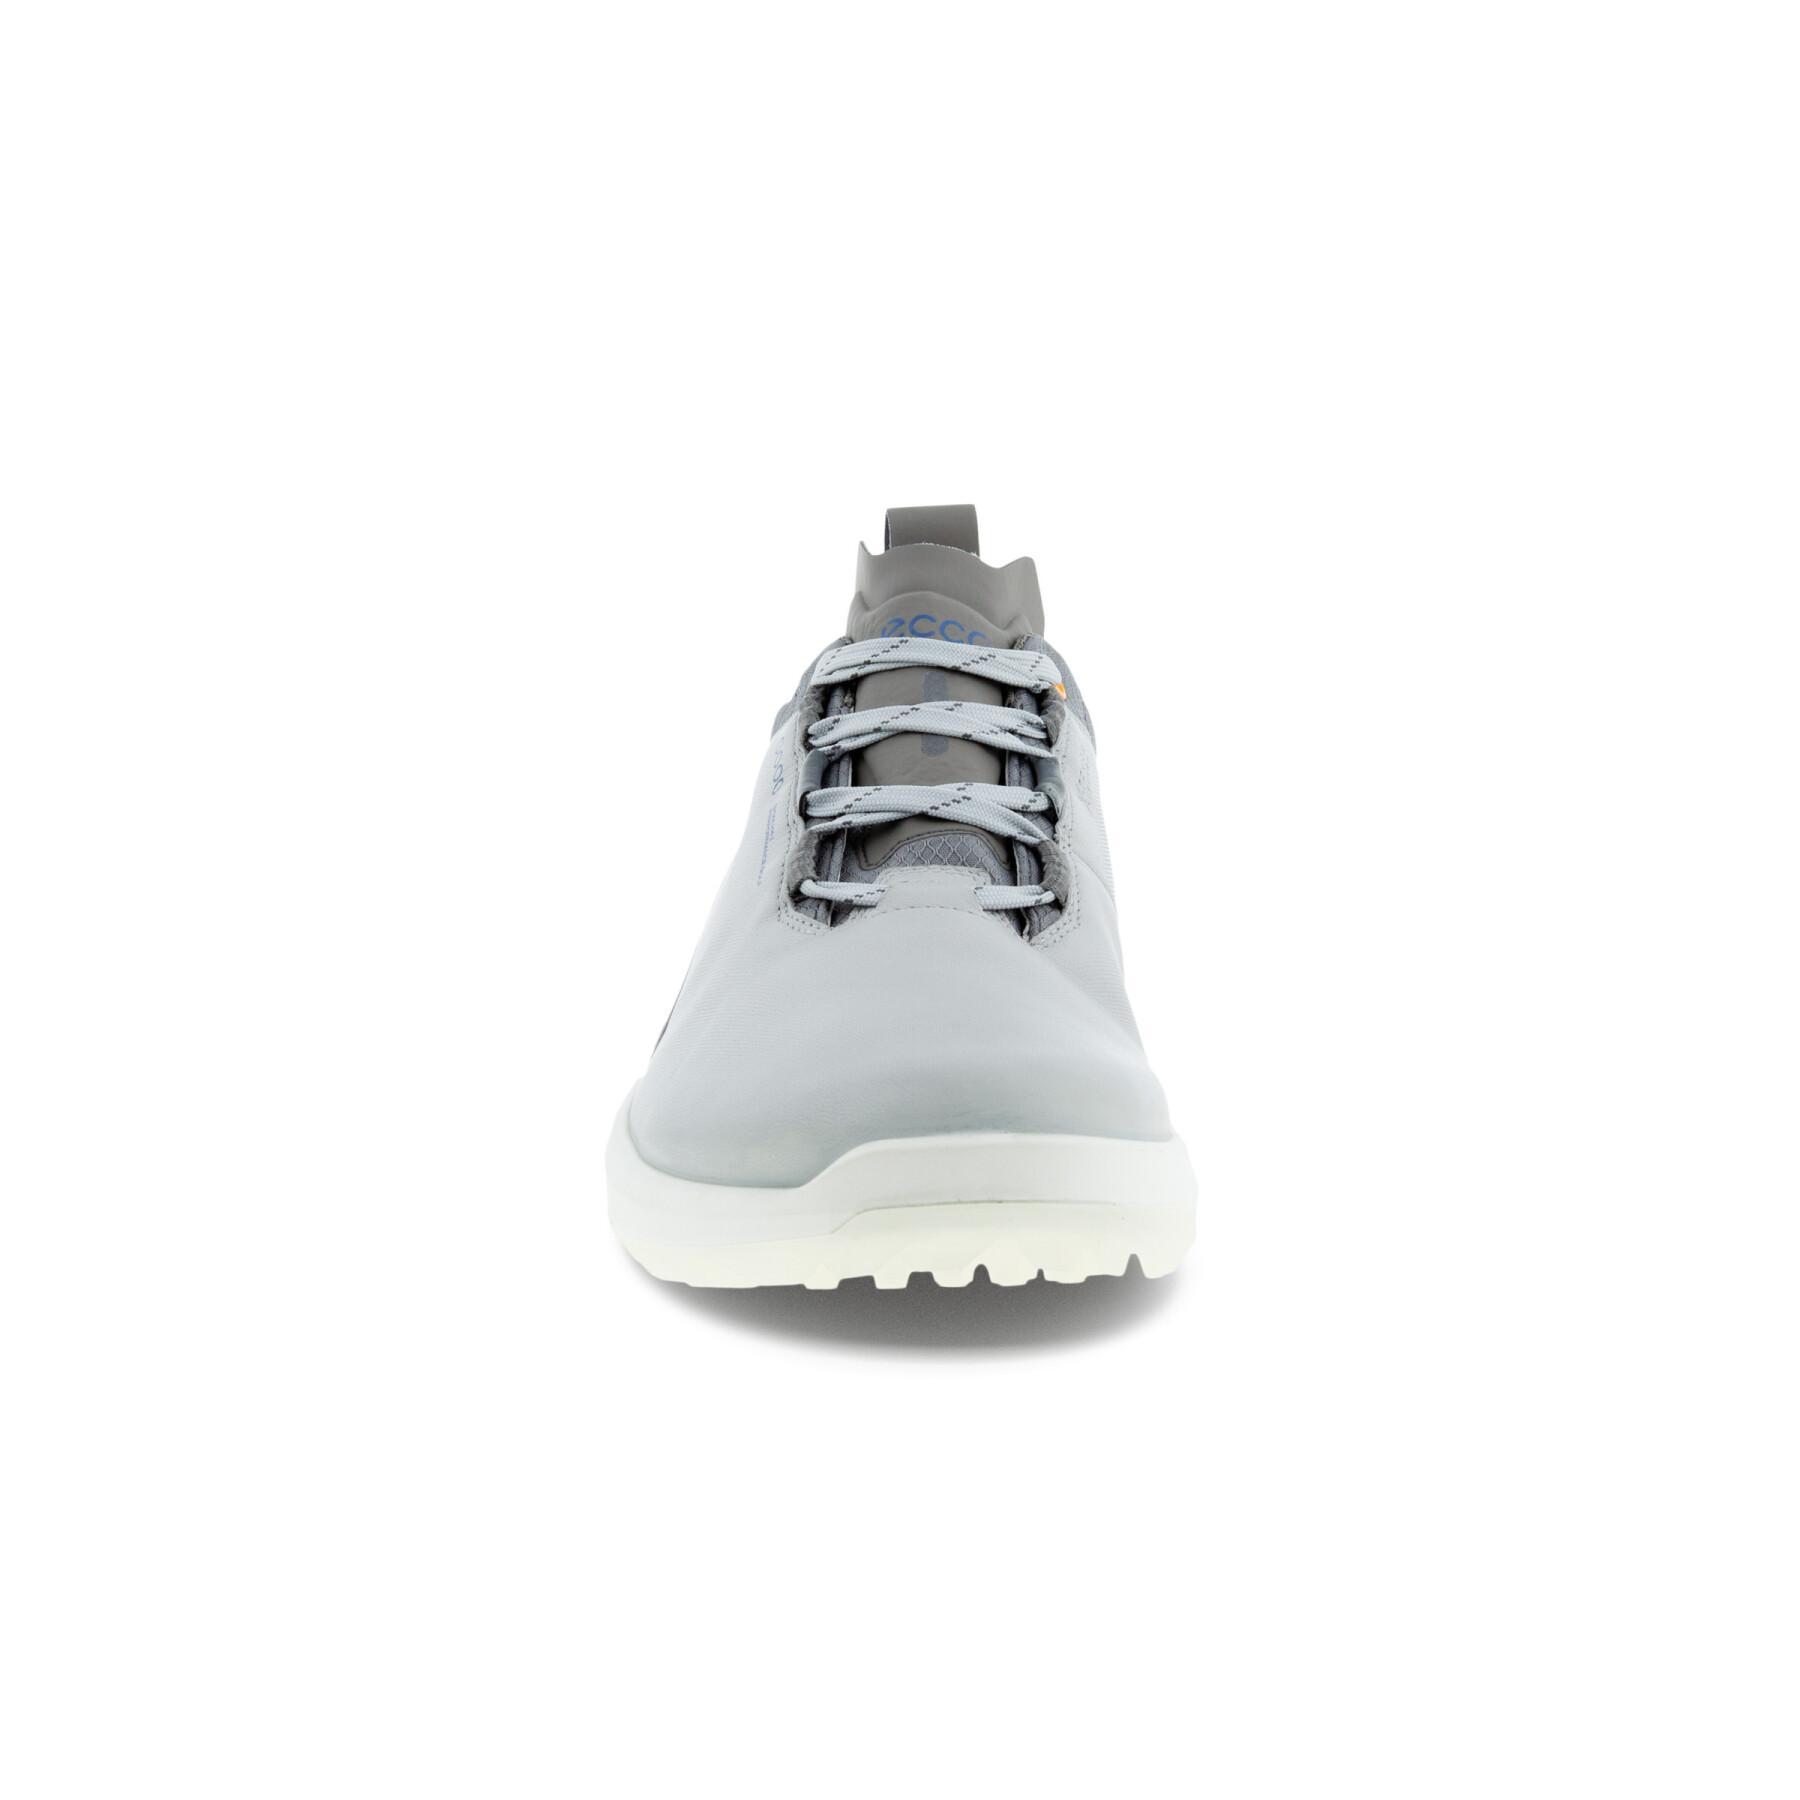 Spikeless golf shoes Ecco Biom H4